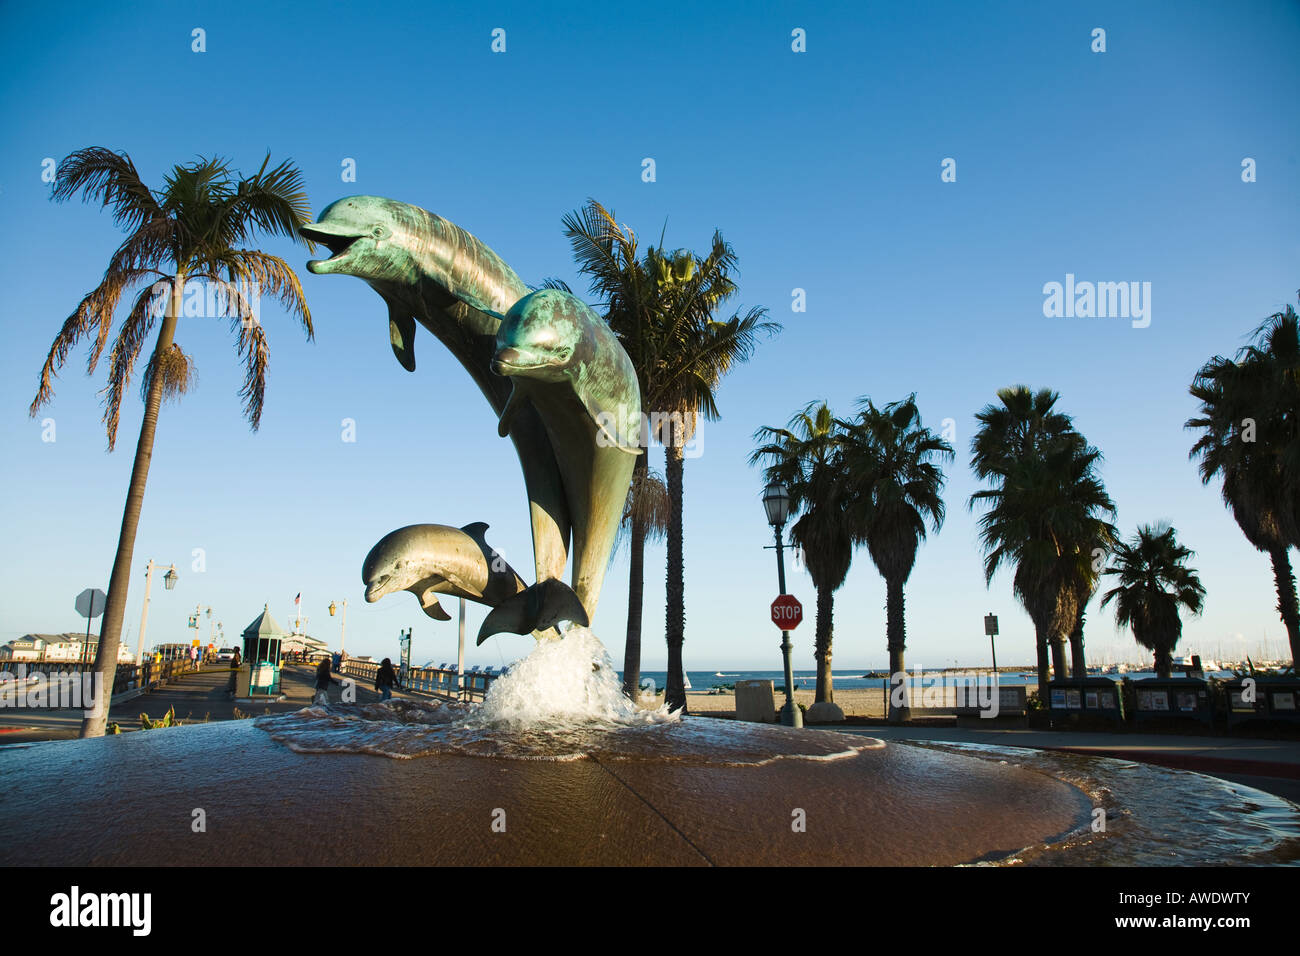 CALIFORNIA Santa Barbara Bud Bottoms Dolphin statue à l'entrée de Stearns Wharf Banque D'Images